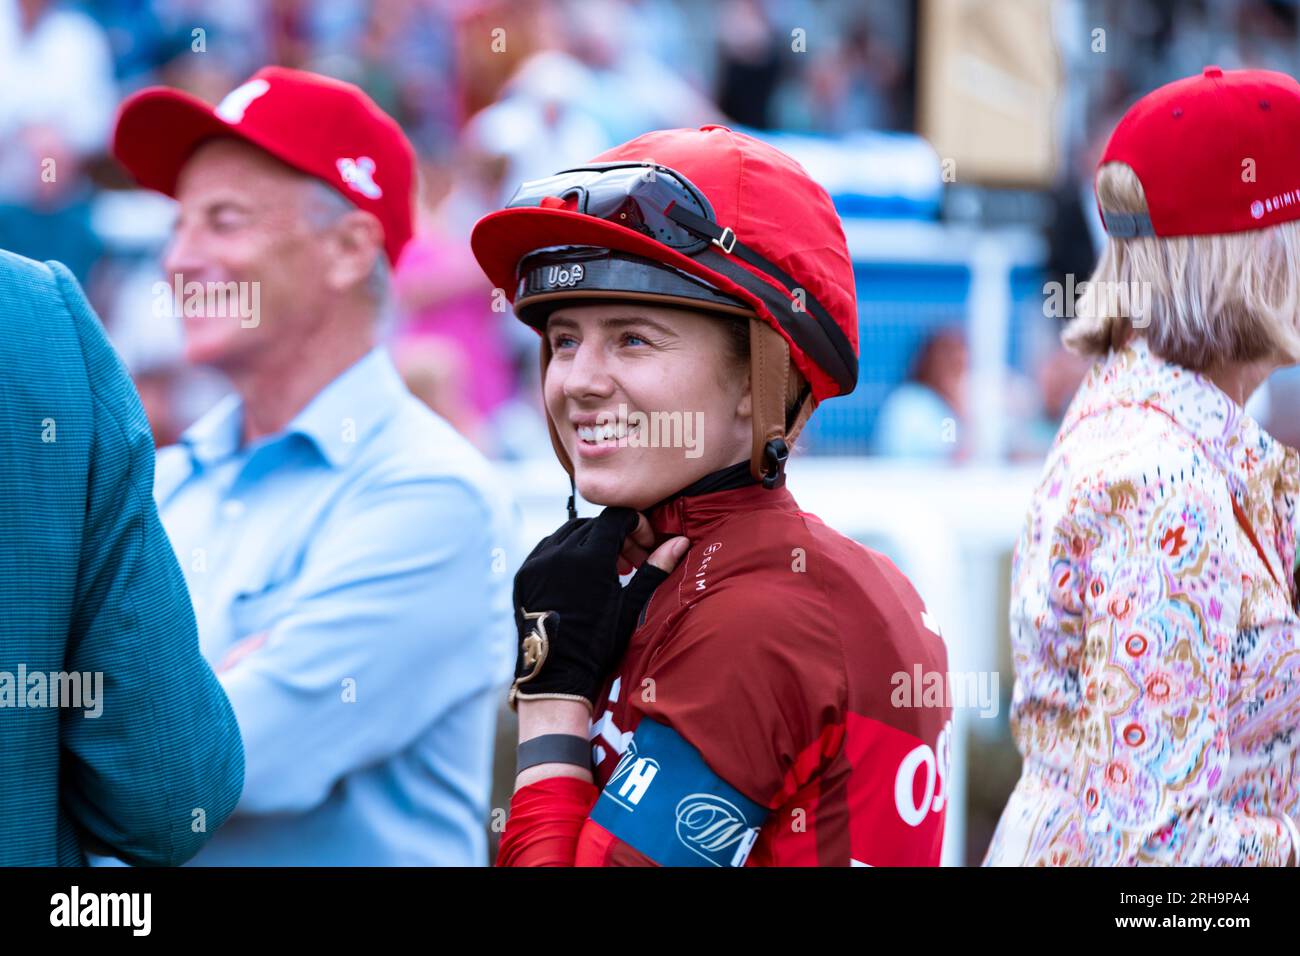 Jockey femminile Saffie Osborne sorride al Racing League Week 2 all'ippodromo di Chepstow. Foto Stock